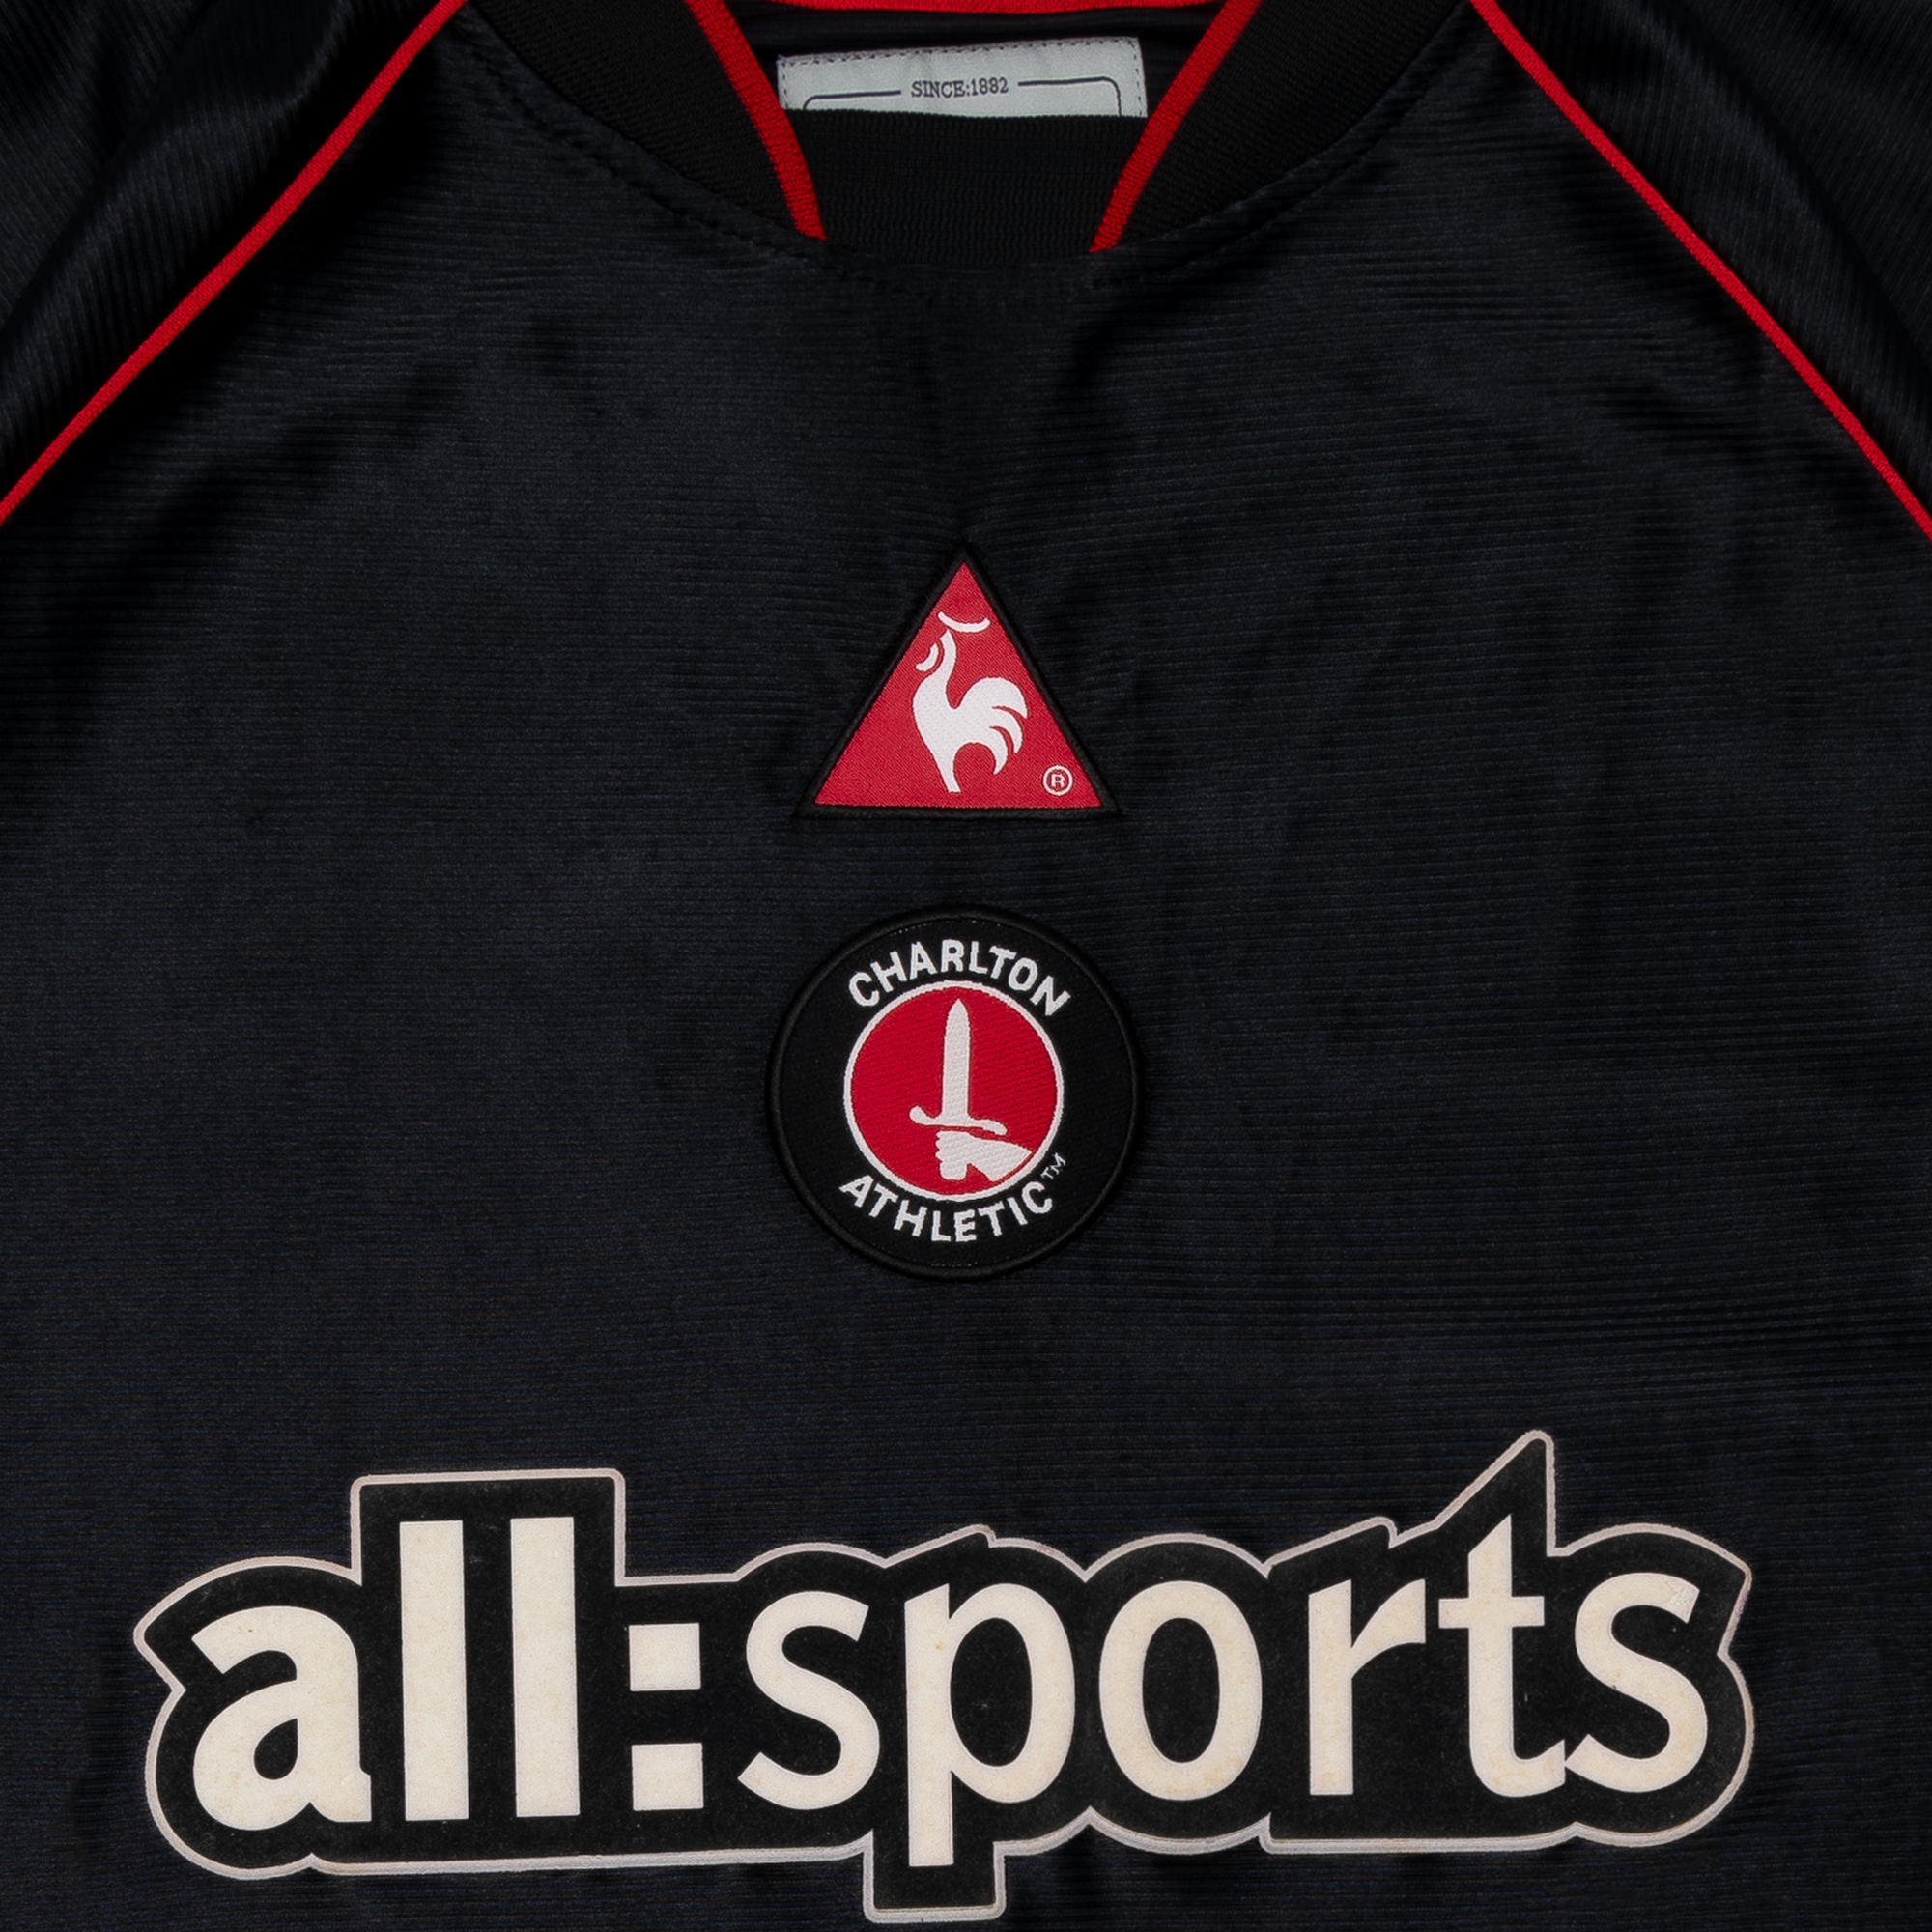 Team Charlton Athletic Football Club All Sports Soccer Jersey Black-PLUS